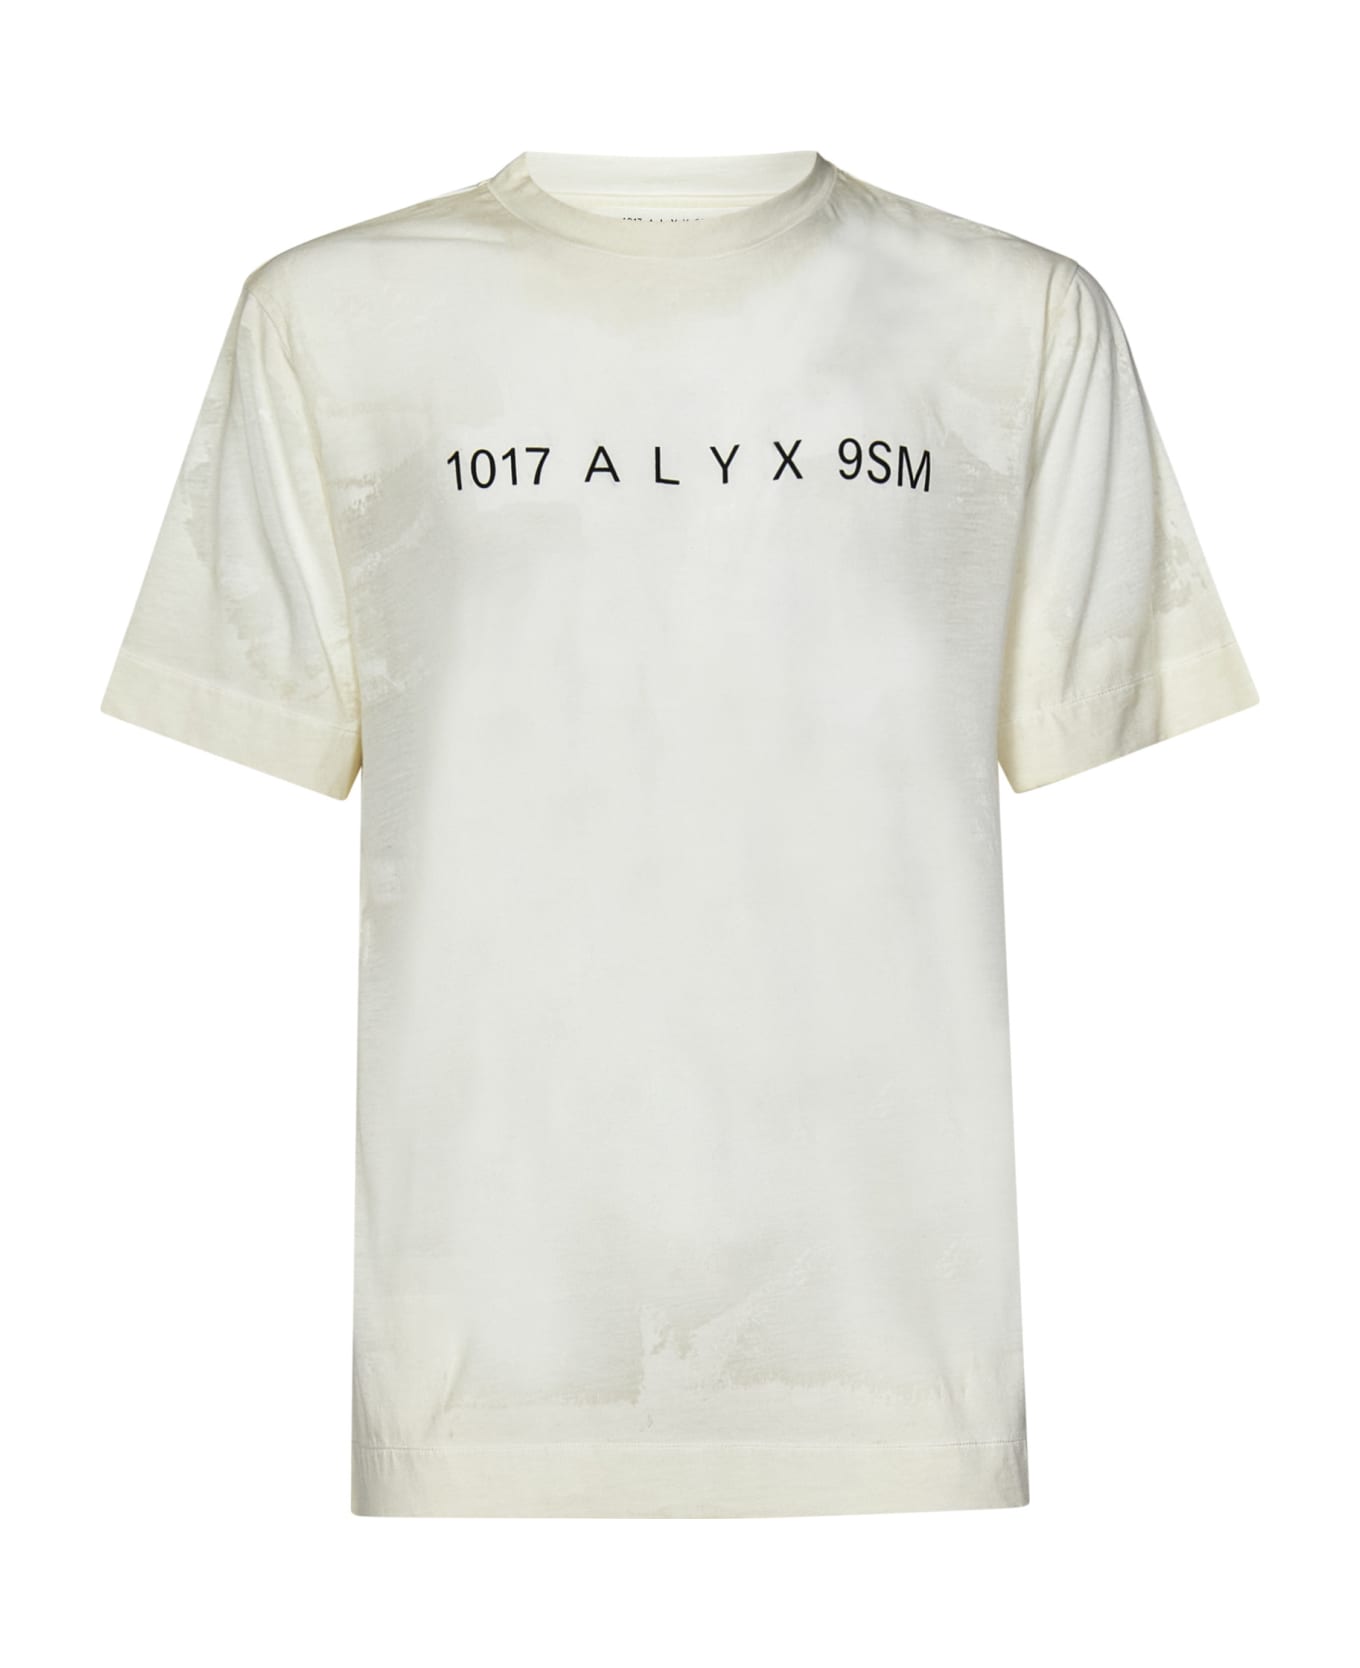 1017 ALYX 9SM T-shirt - White